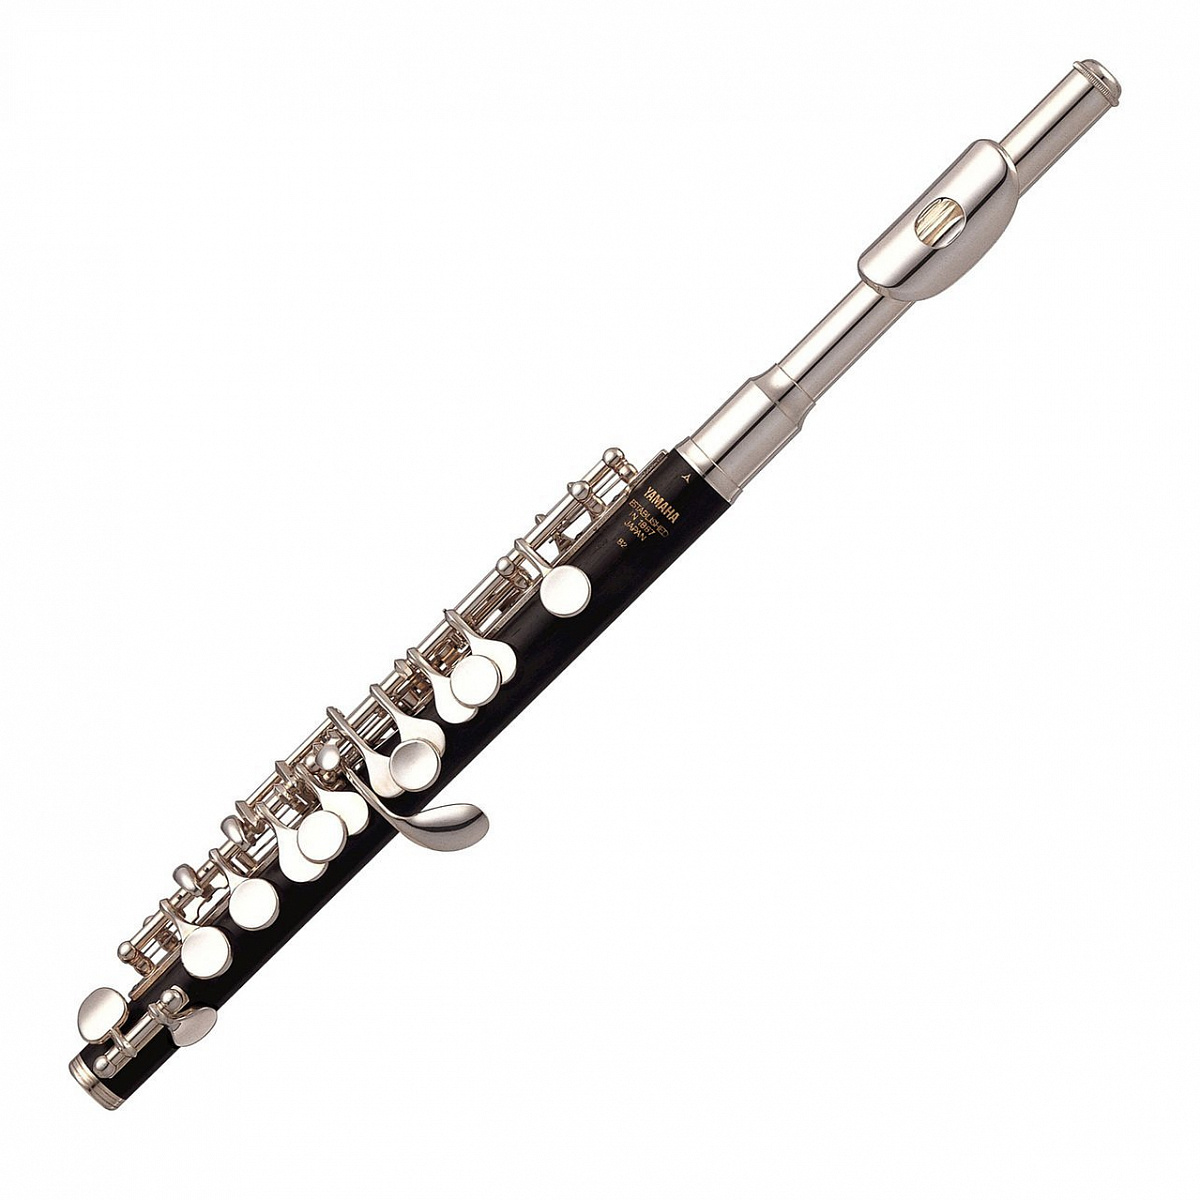 Флейта минус. Флейта-Пикколо флейта. Флейта Пикколо. Флейта-Пикколо деревянный духовой музыкальный инструмент. Пикколо инструмент.